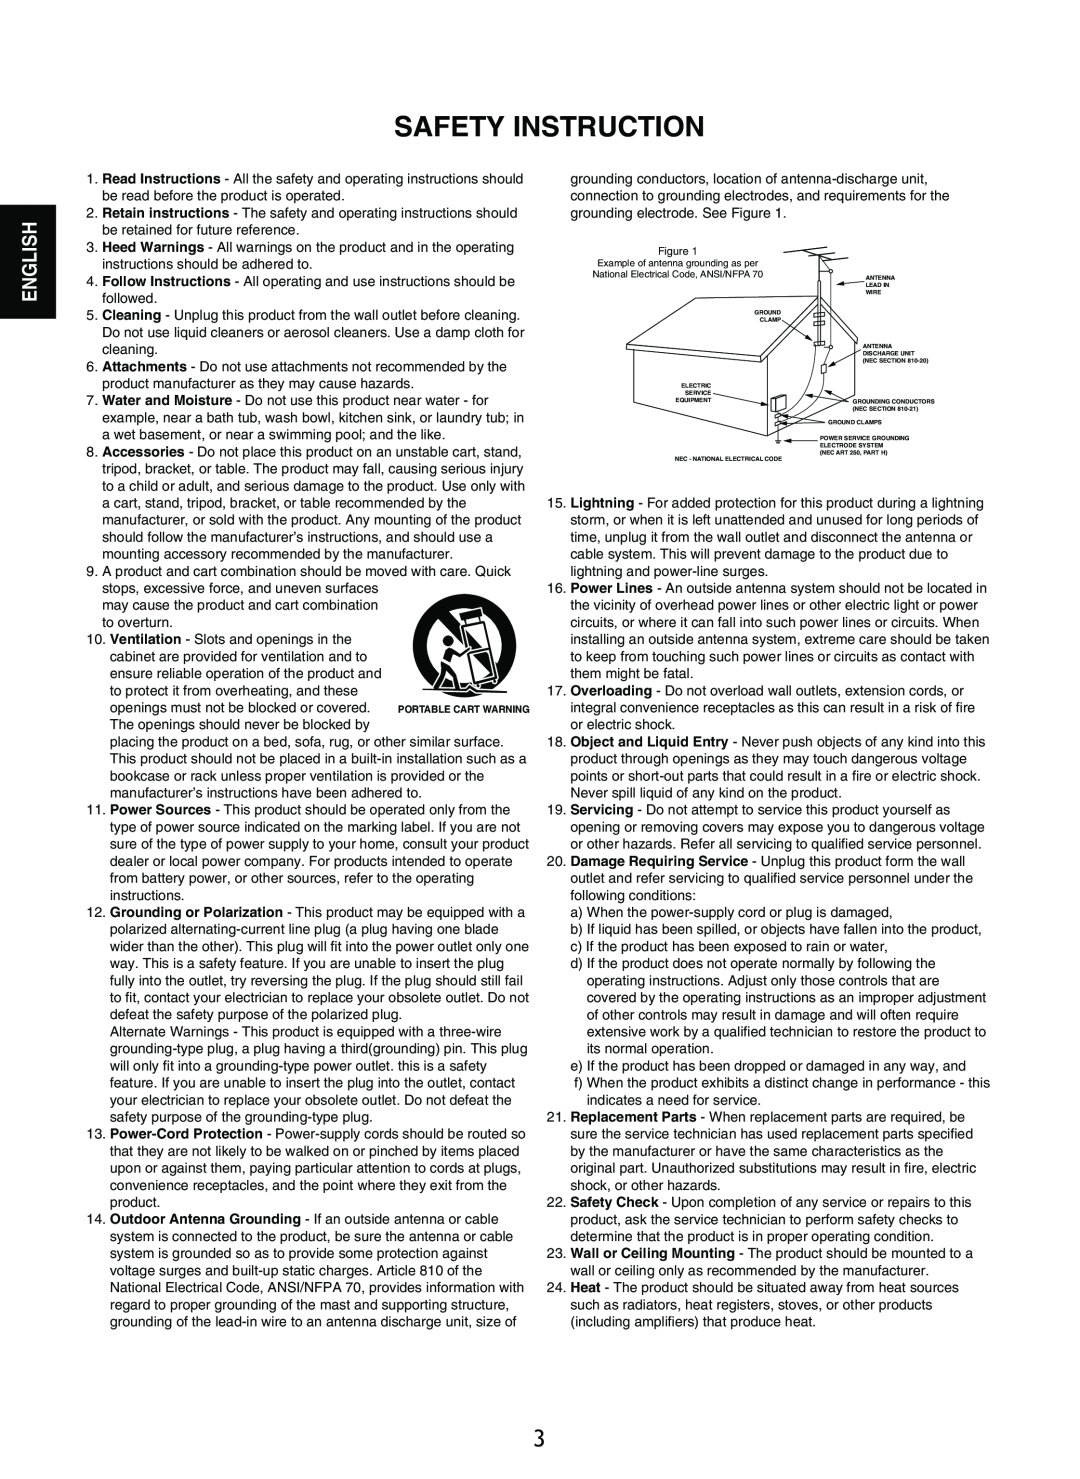 Sherwood RD-8601 operating instructions Safety Instruction 